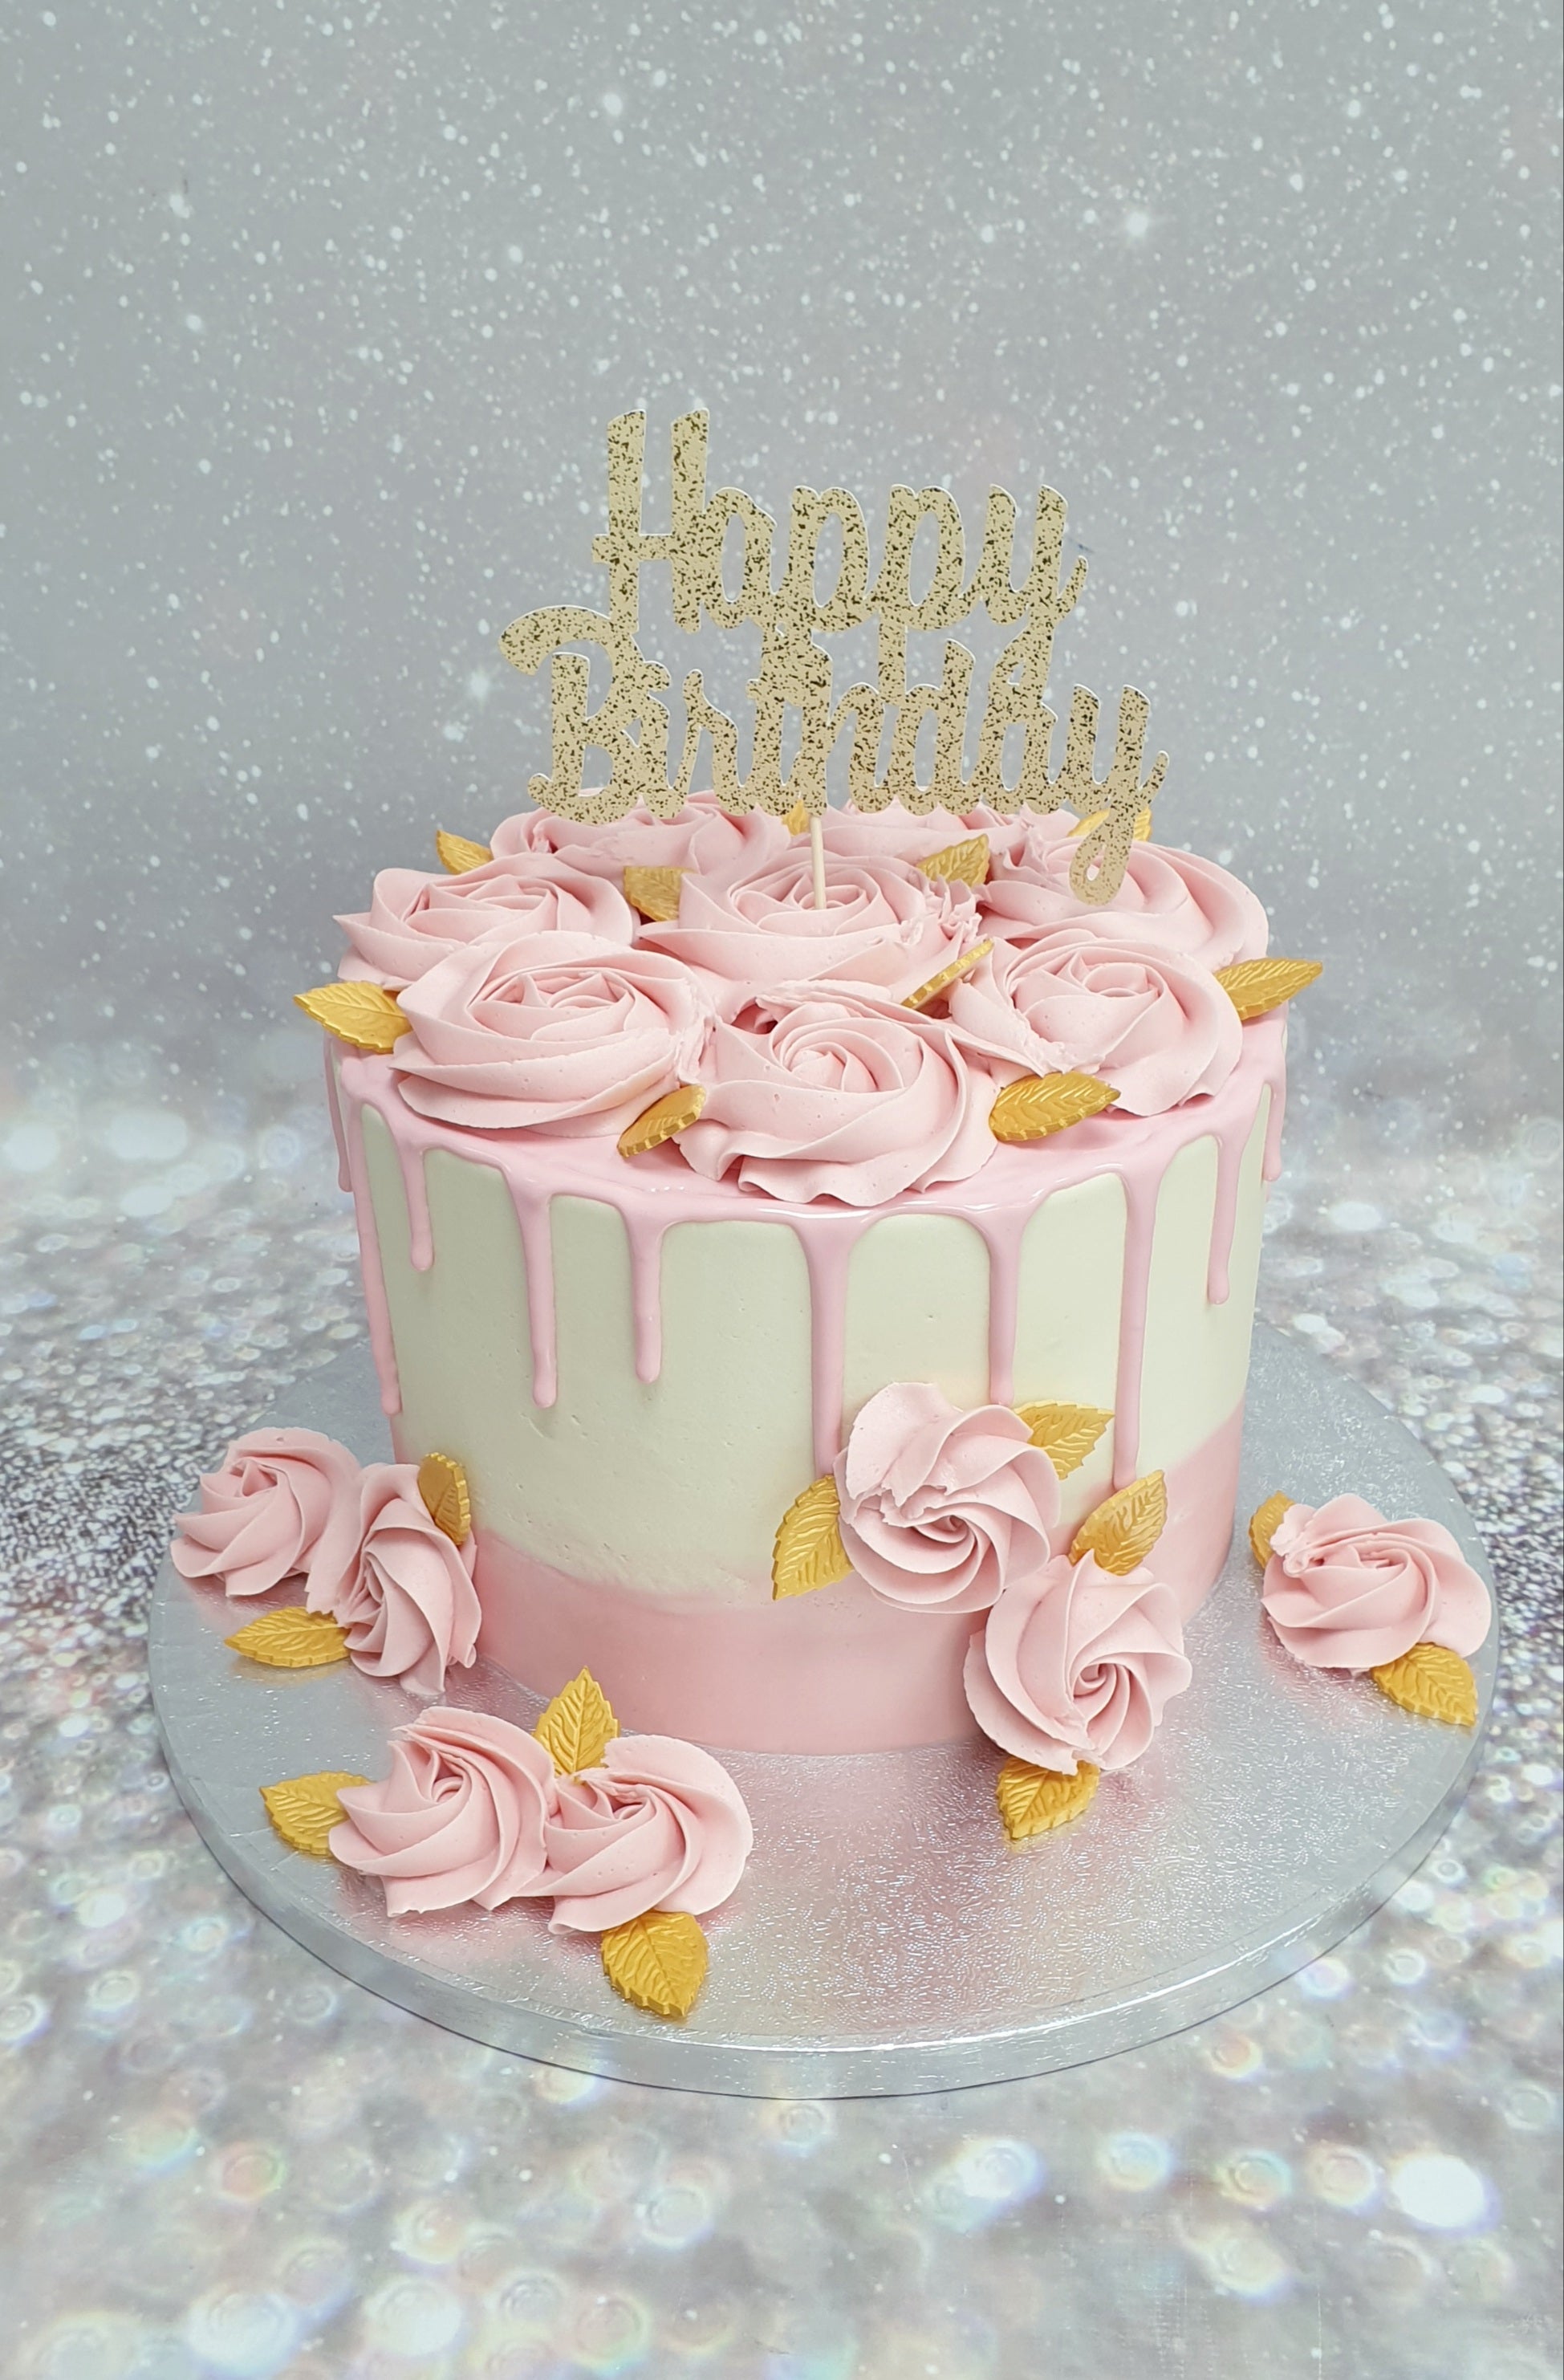 Rosette Drip Cake | Truffles Bakers & Confectioners LTD